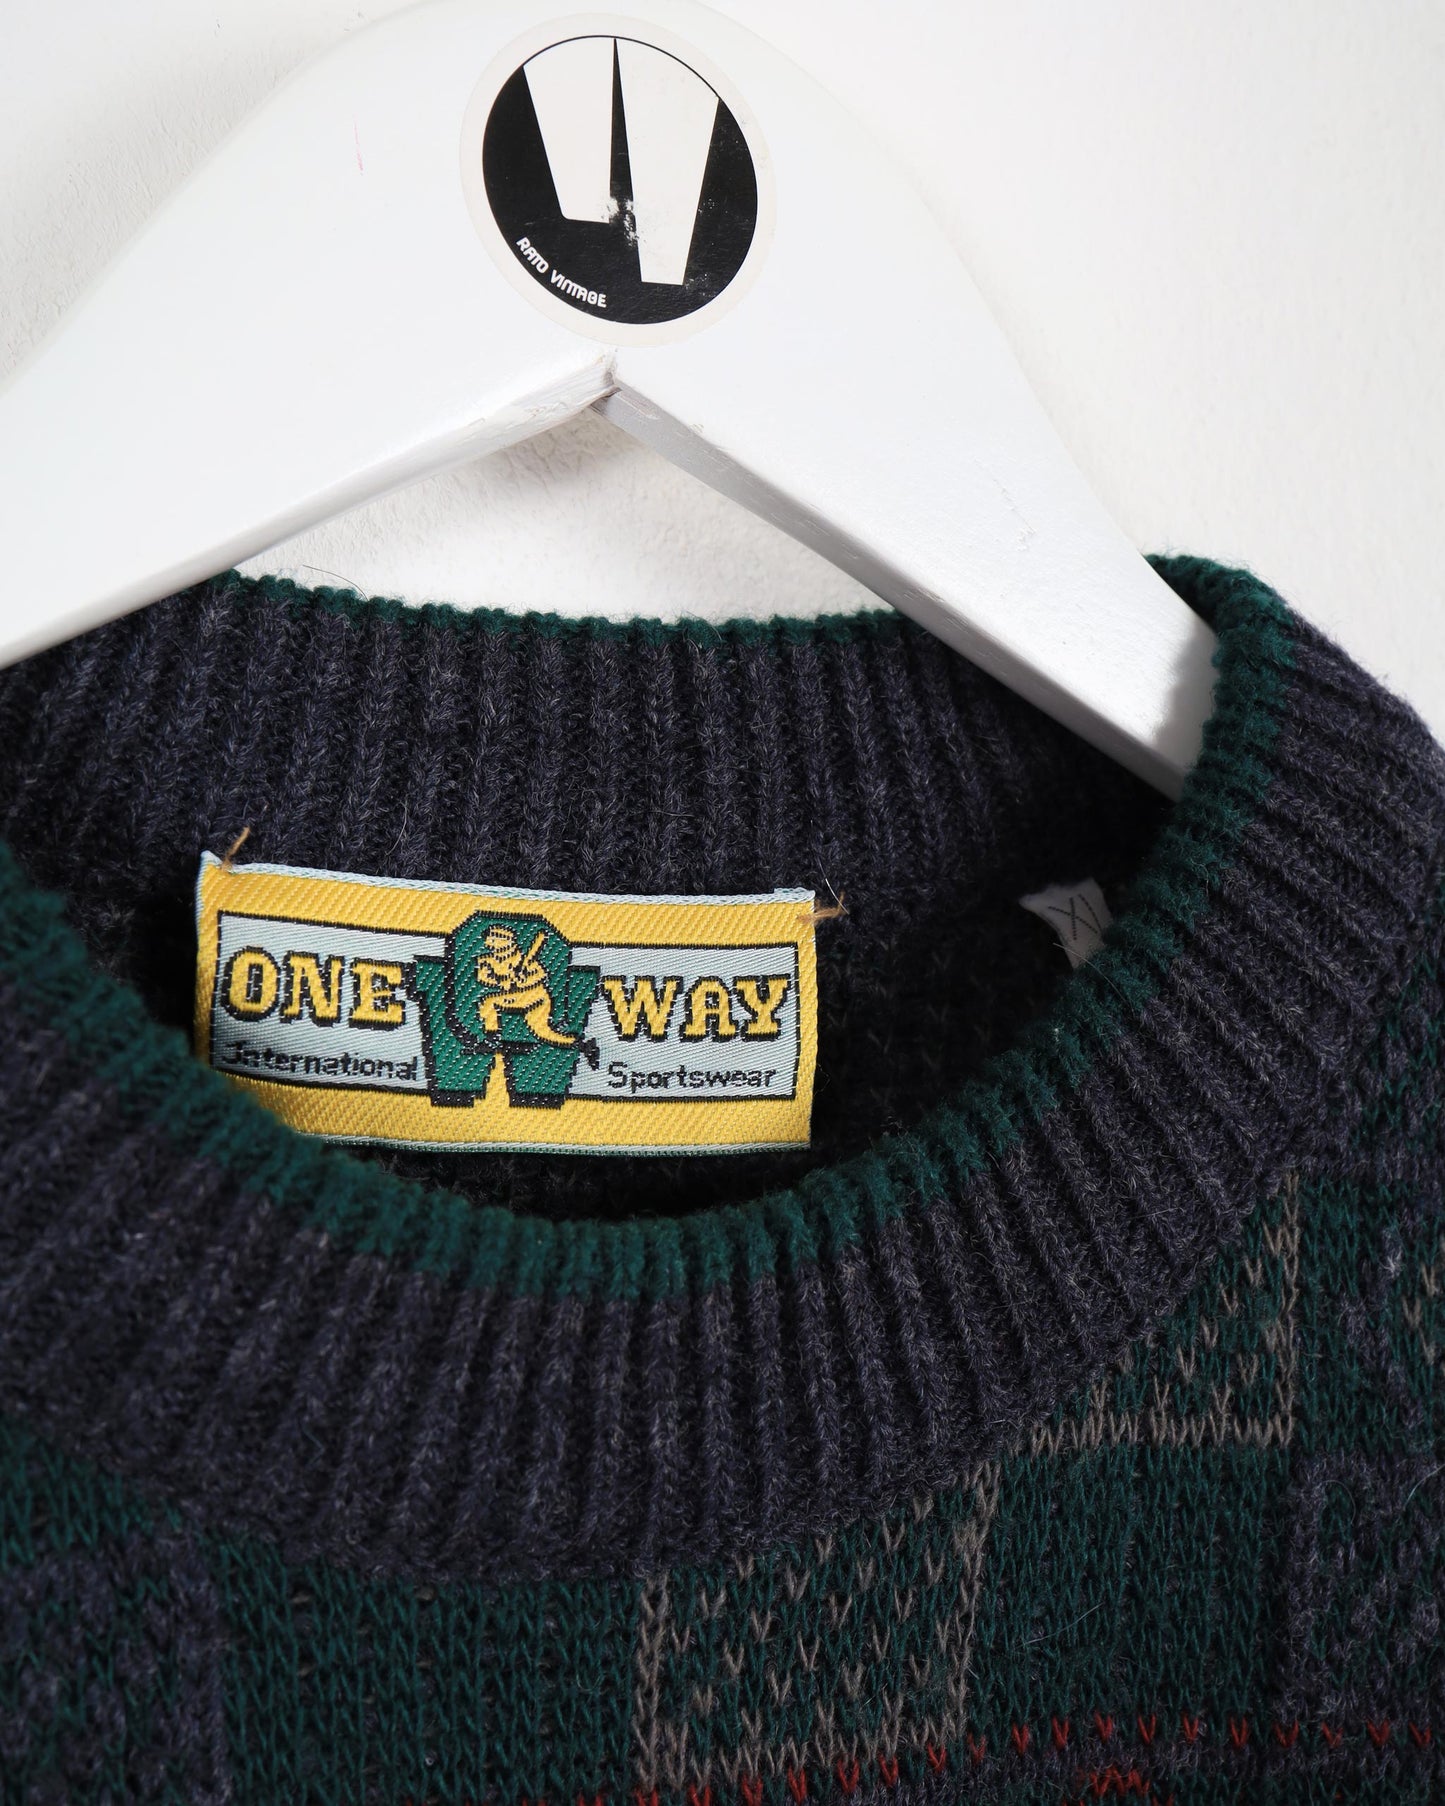 Maglione in lana con fantasia vintage One Way Sportswear